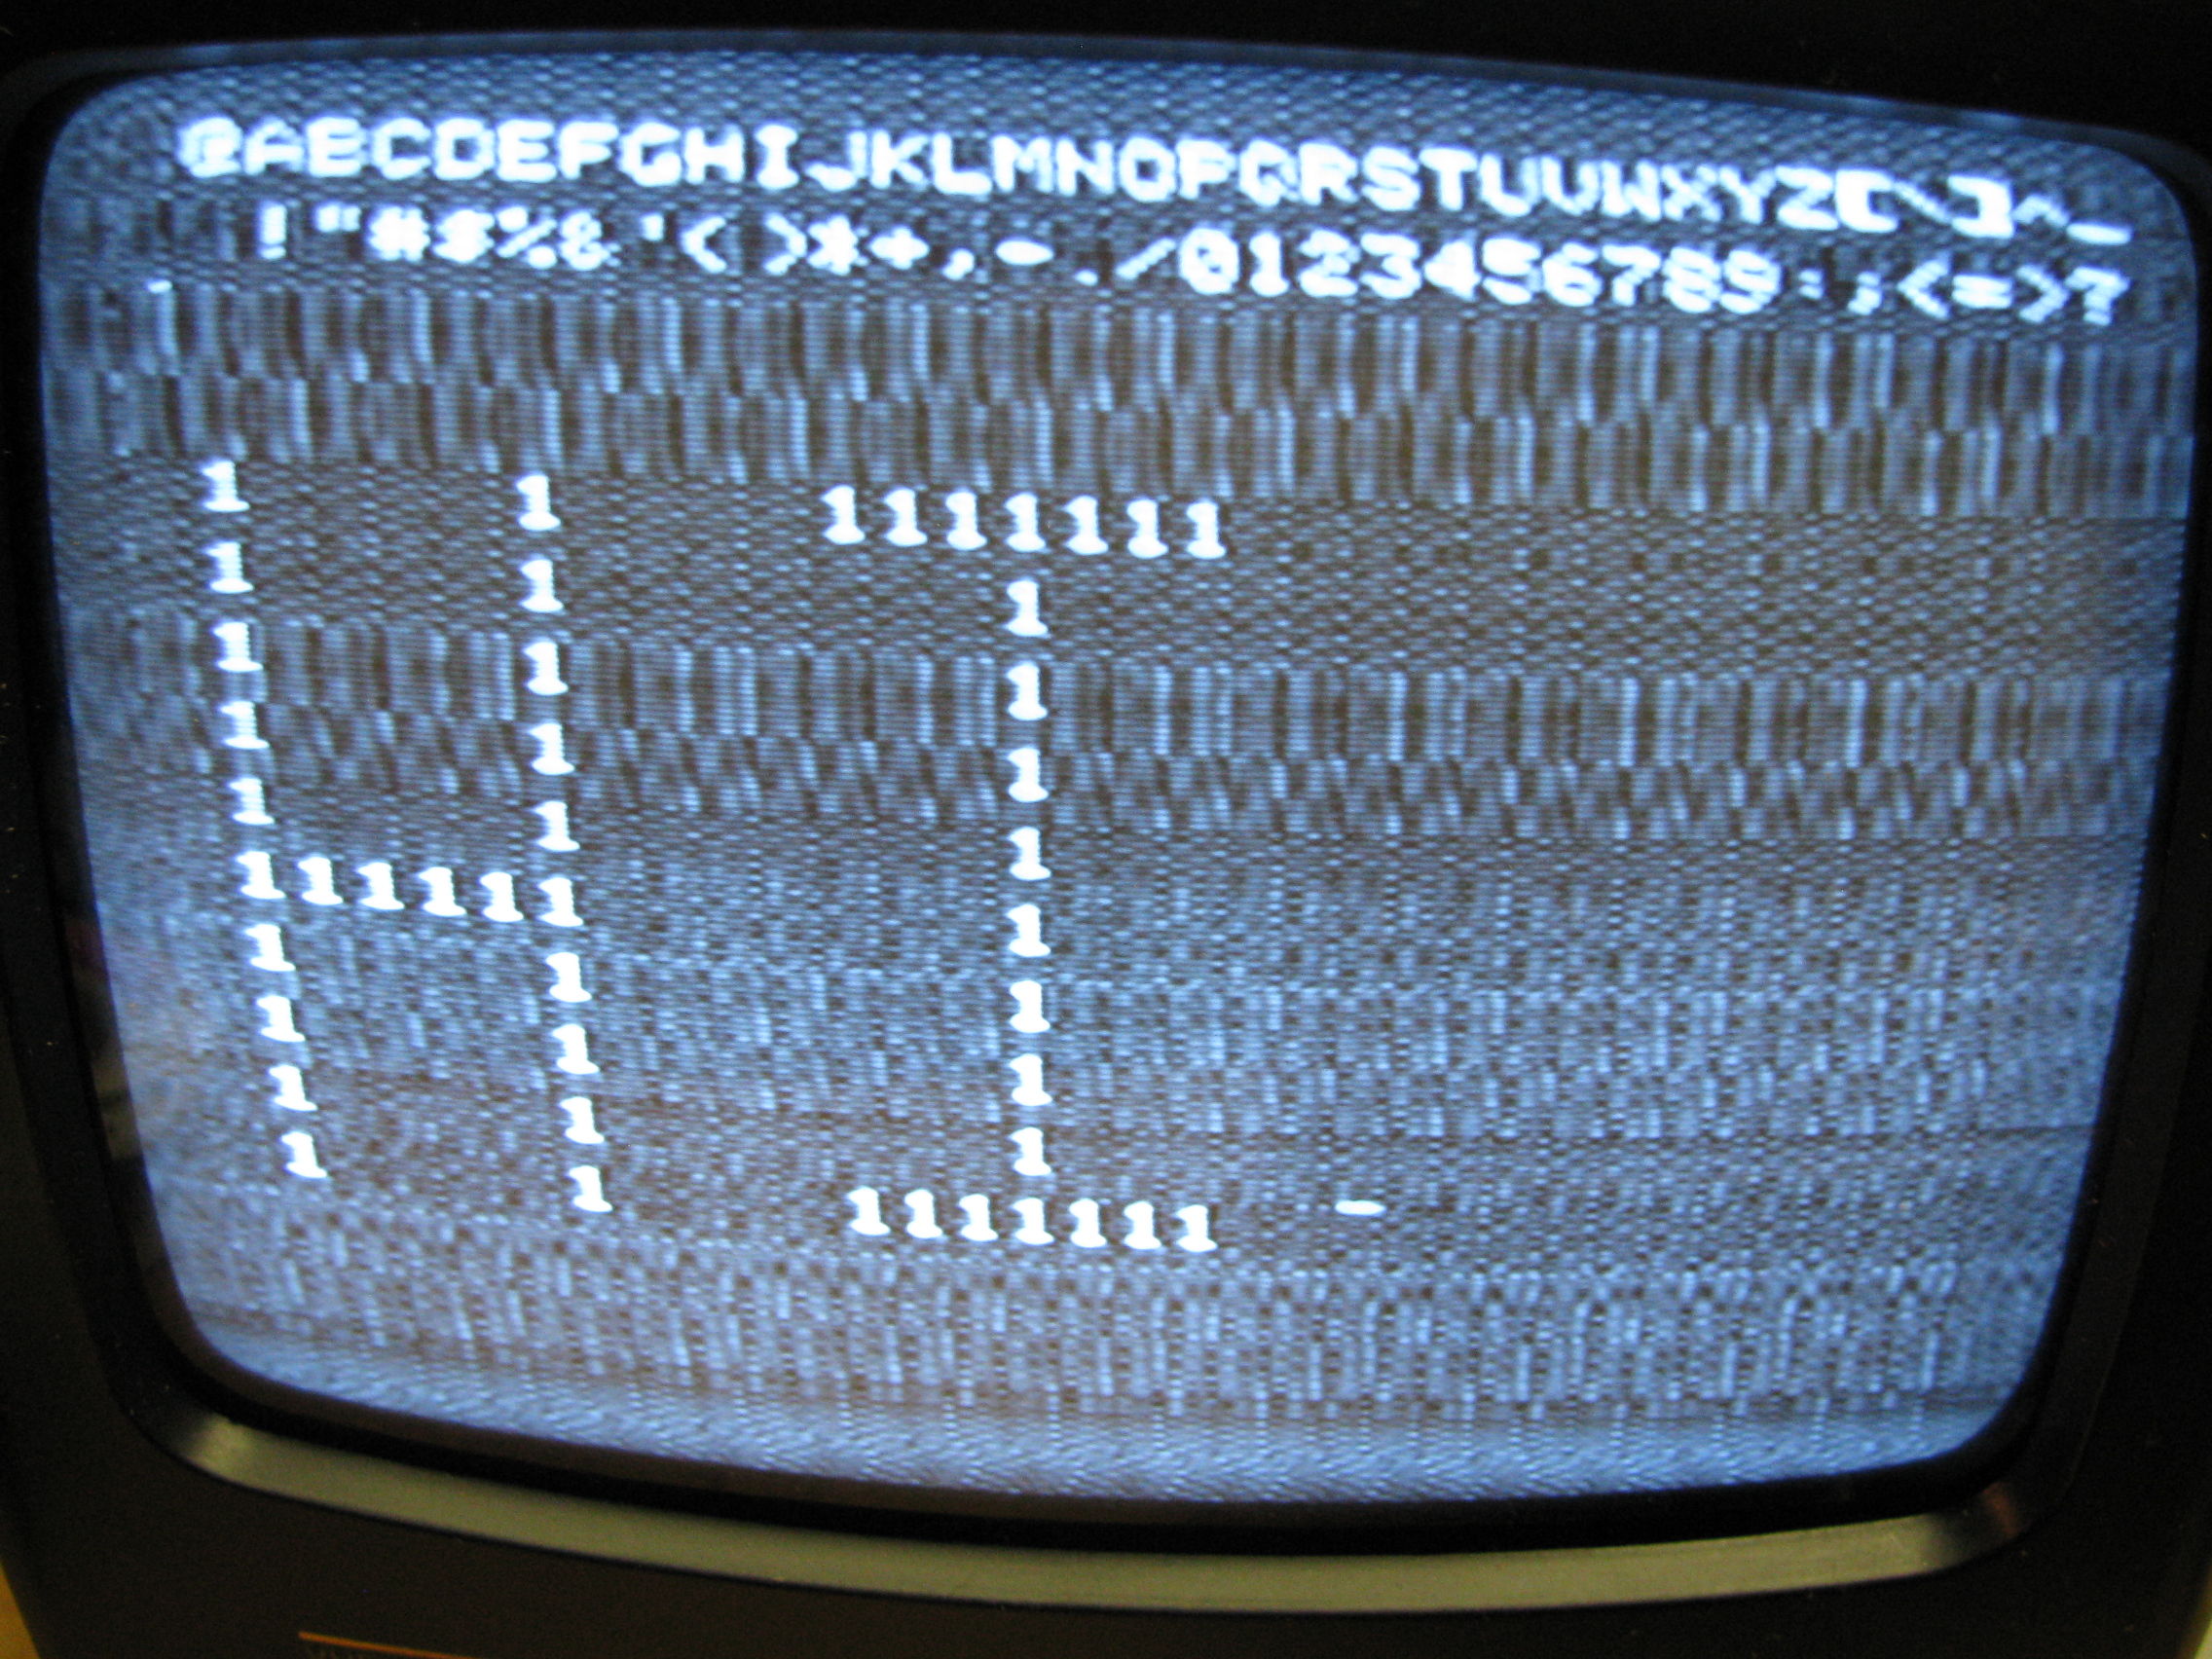 TV Typewriter as viewed via RF modulator on a tiny TV